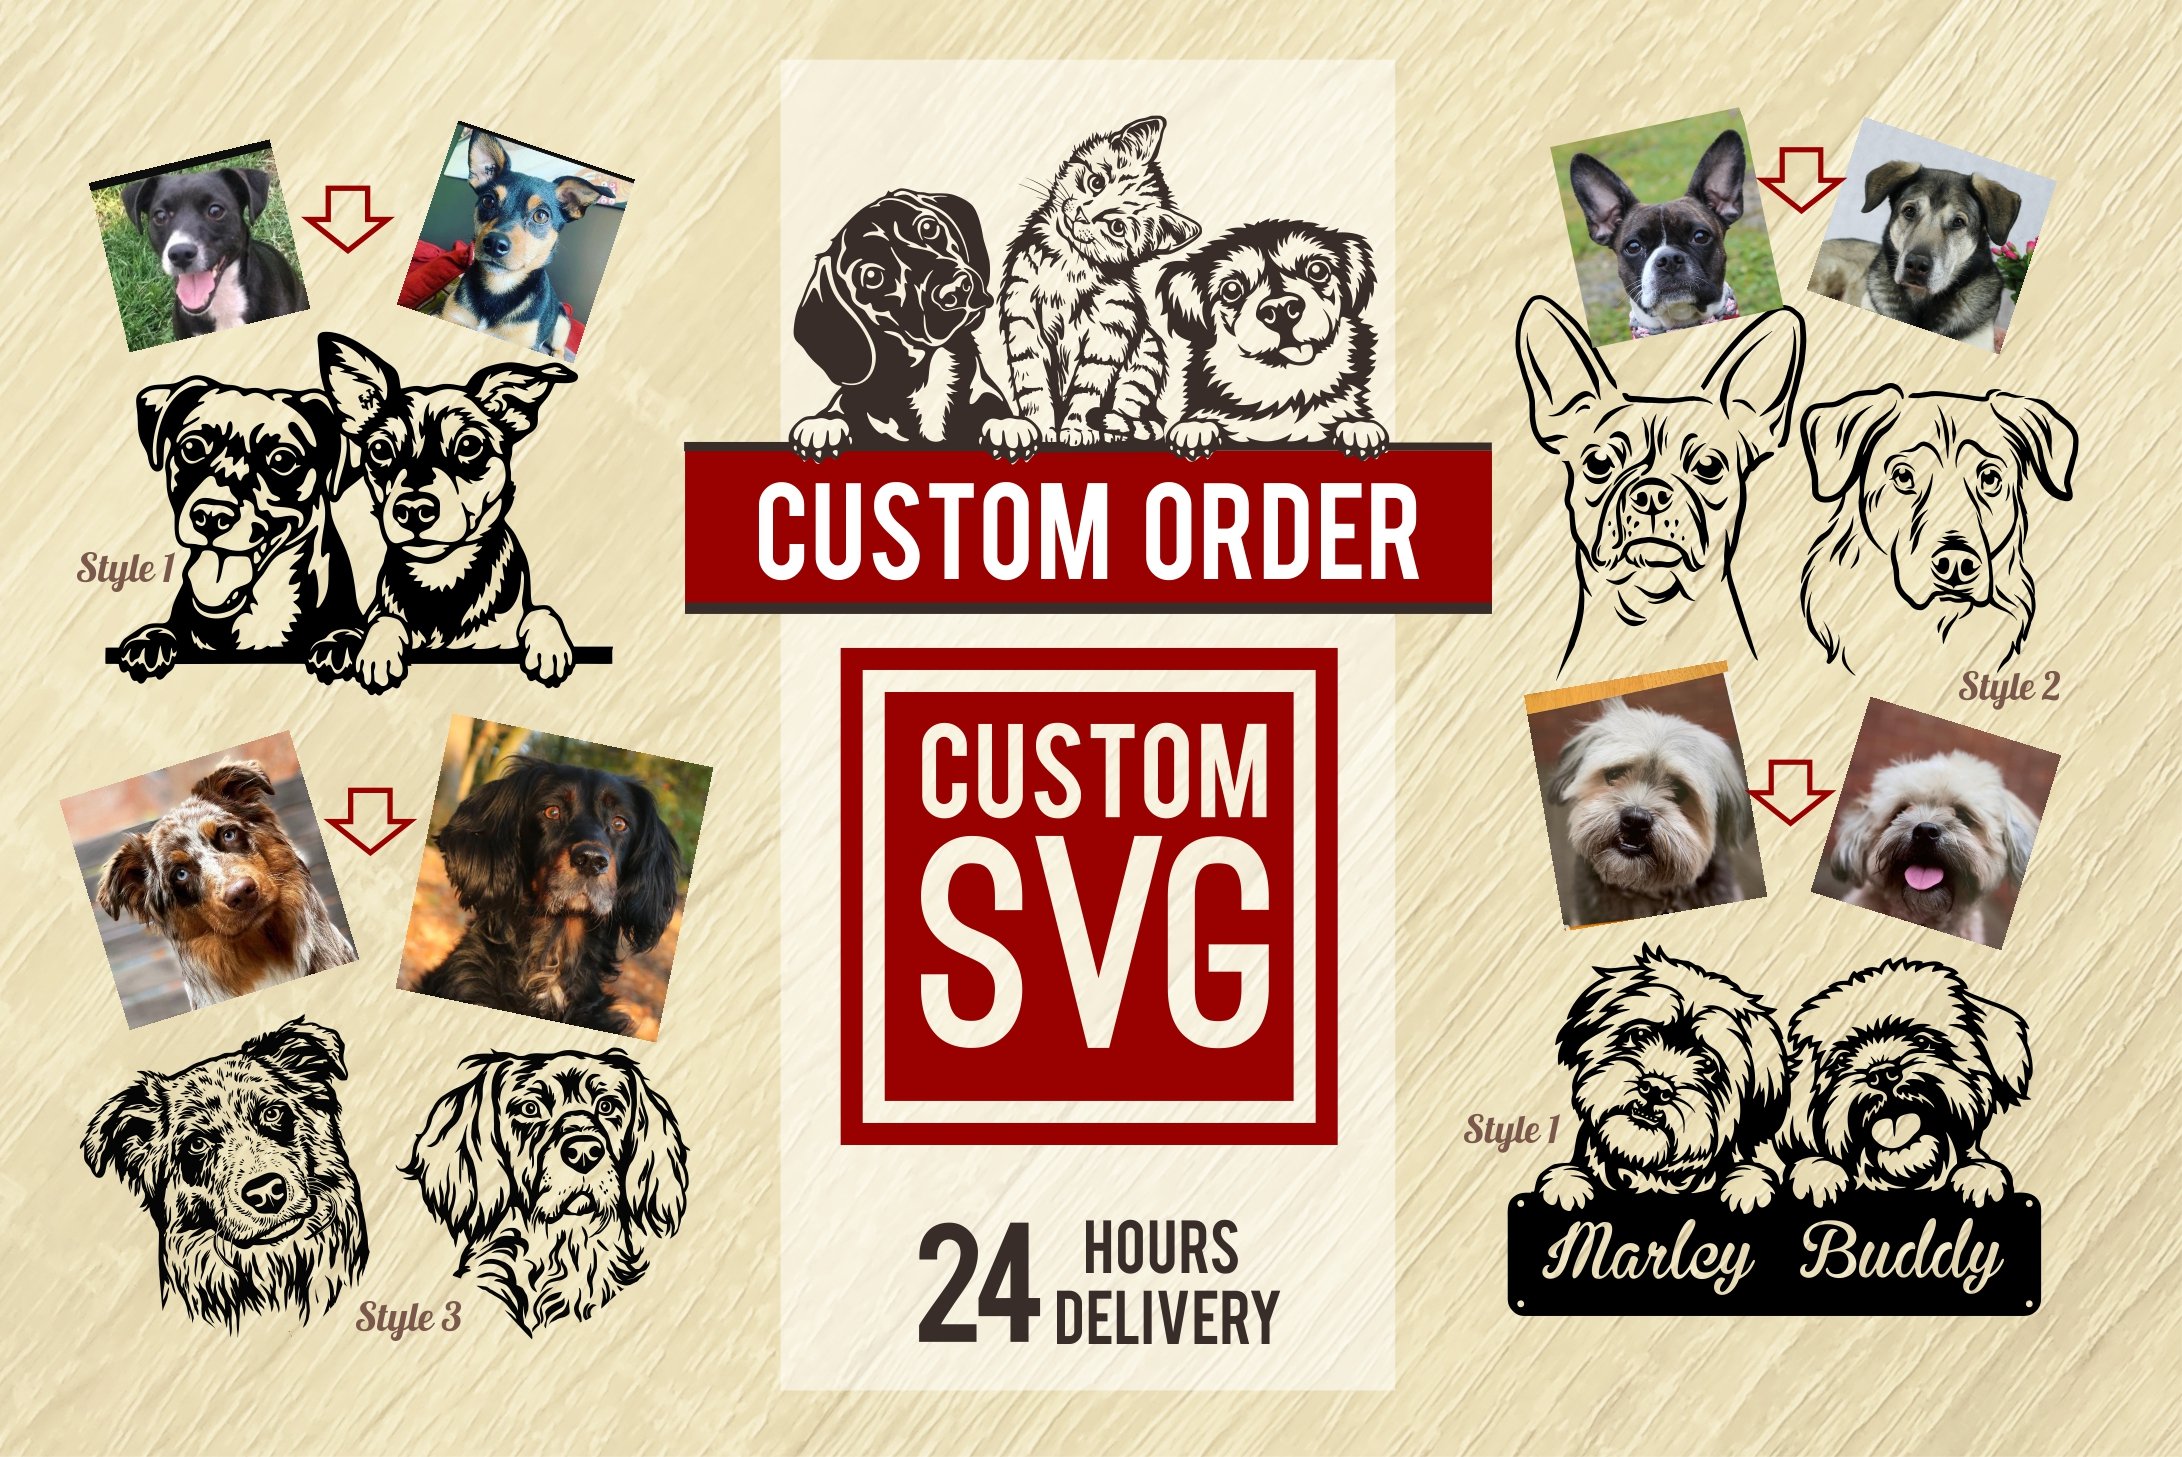 pets custom order service 281229 691